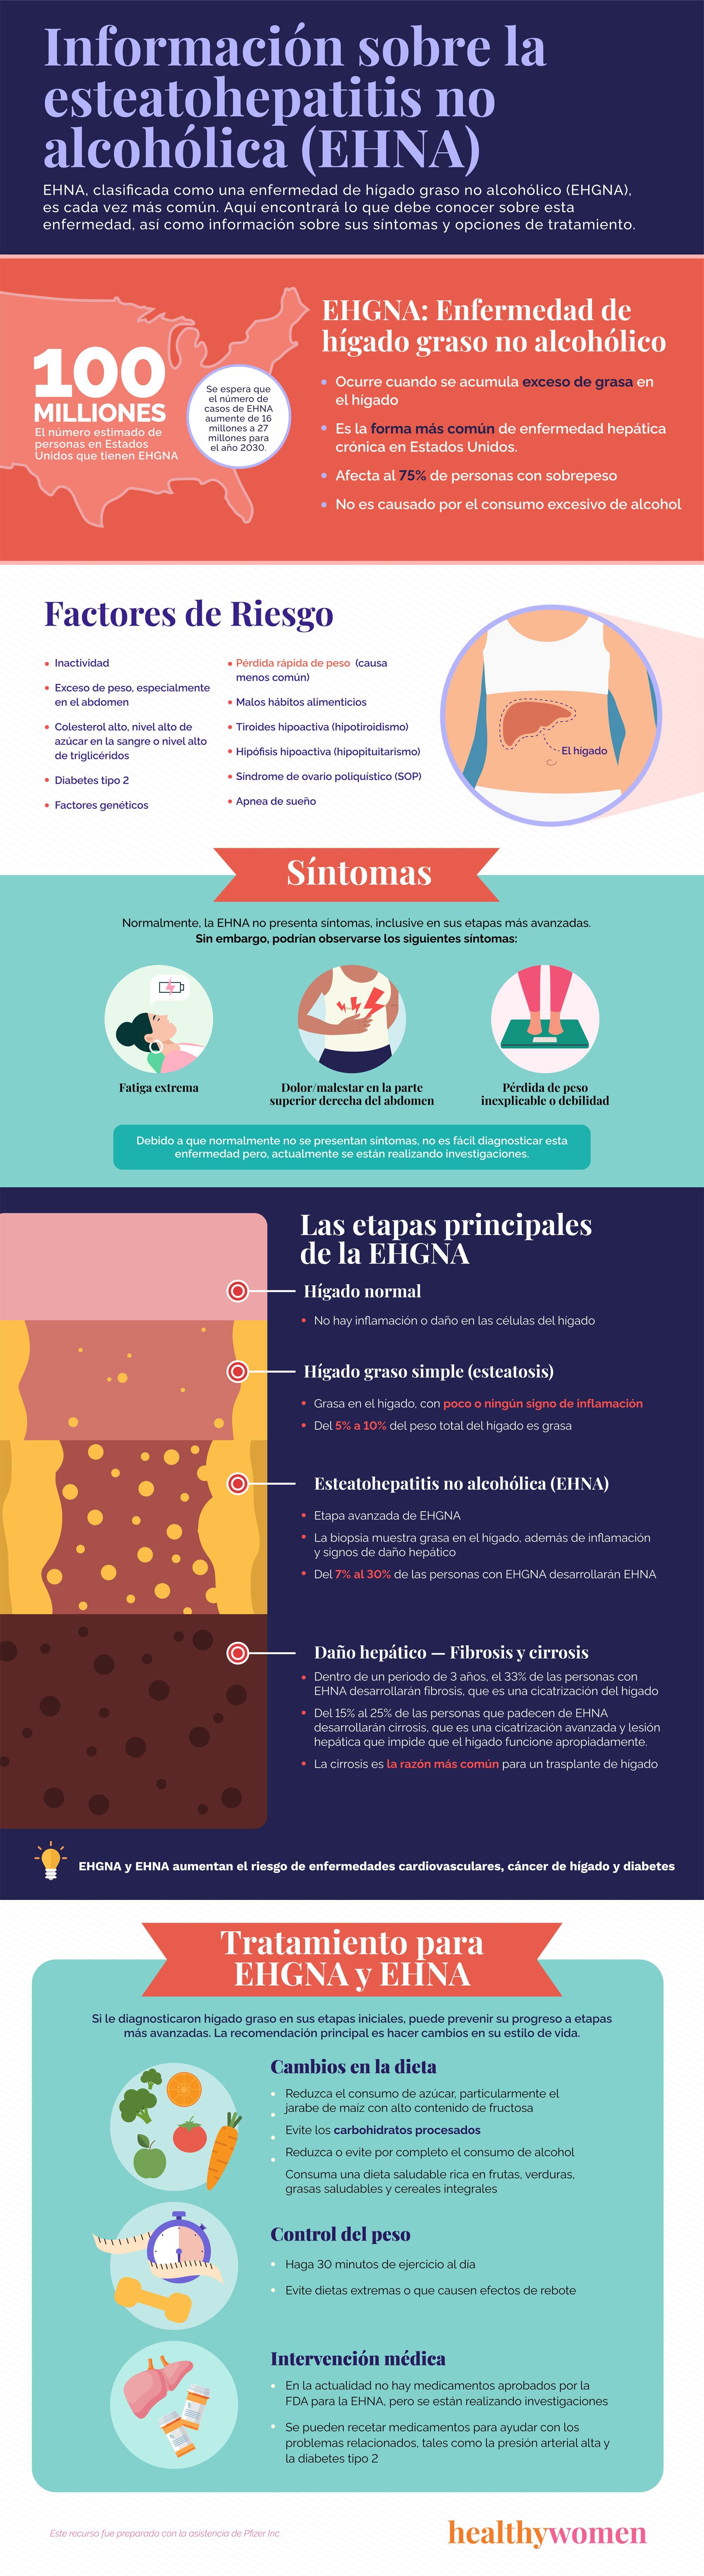 Infographic Enfermedad de h\u00edgado graso no alcoh\u00f3lico. Click the image to open the PDF